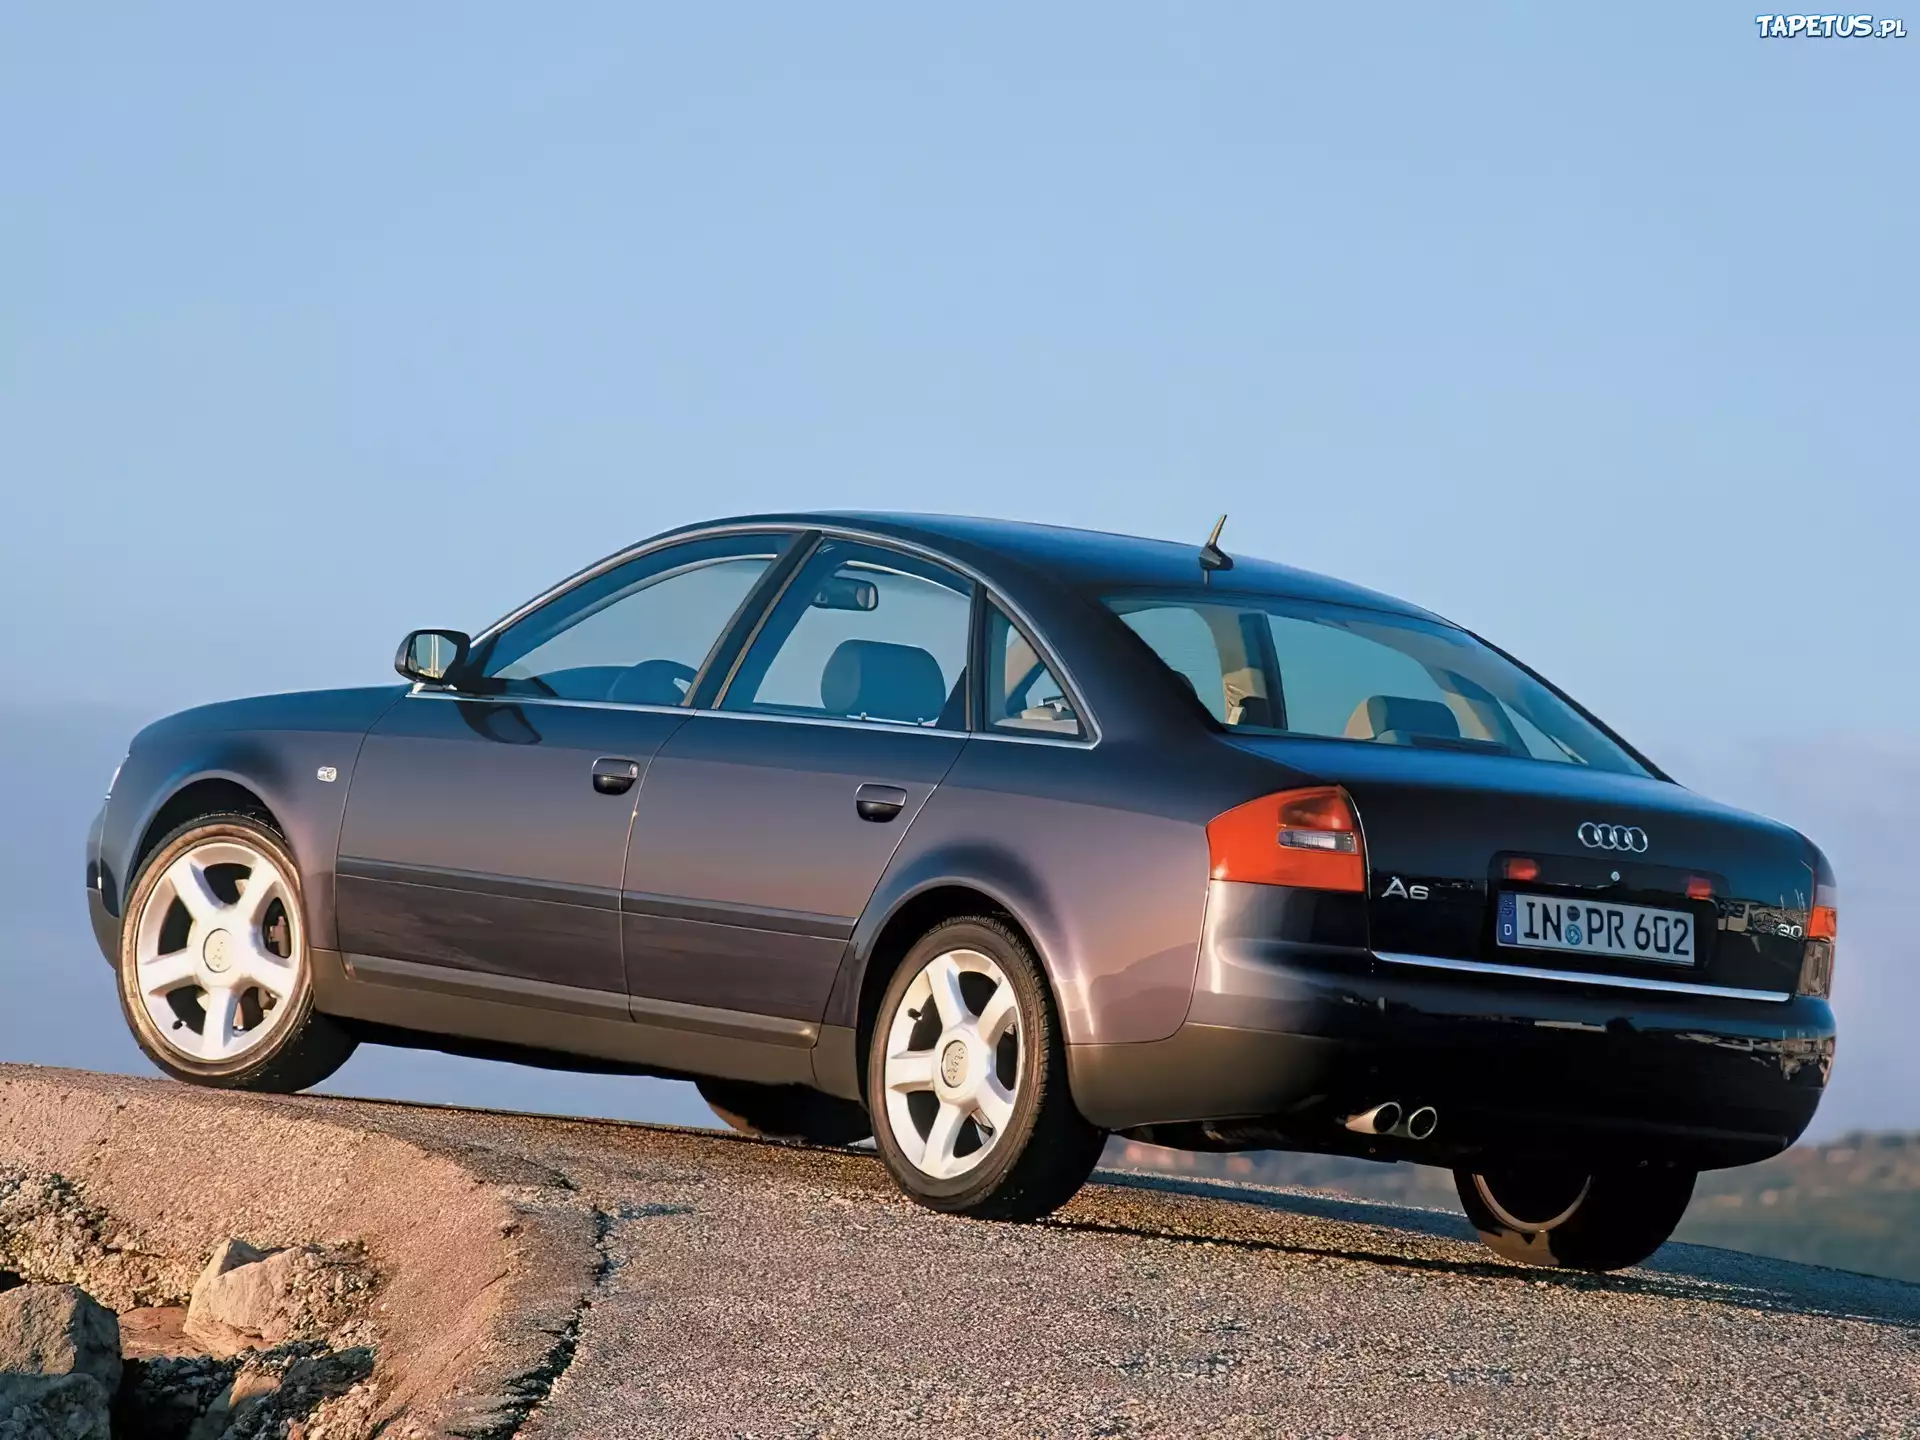 Ауди 4 2001 год. Ауди а6 седан 2001. Audi a6 c5 2002. Audi a6 c5 2001. Ауди а6 с5 1997.